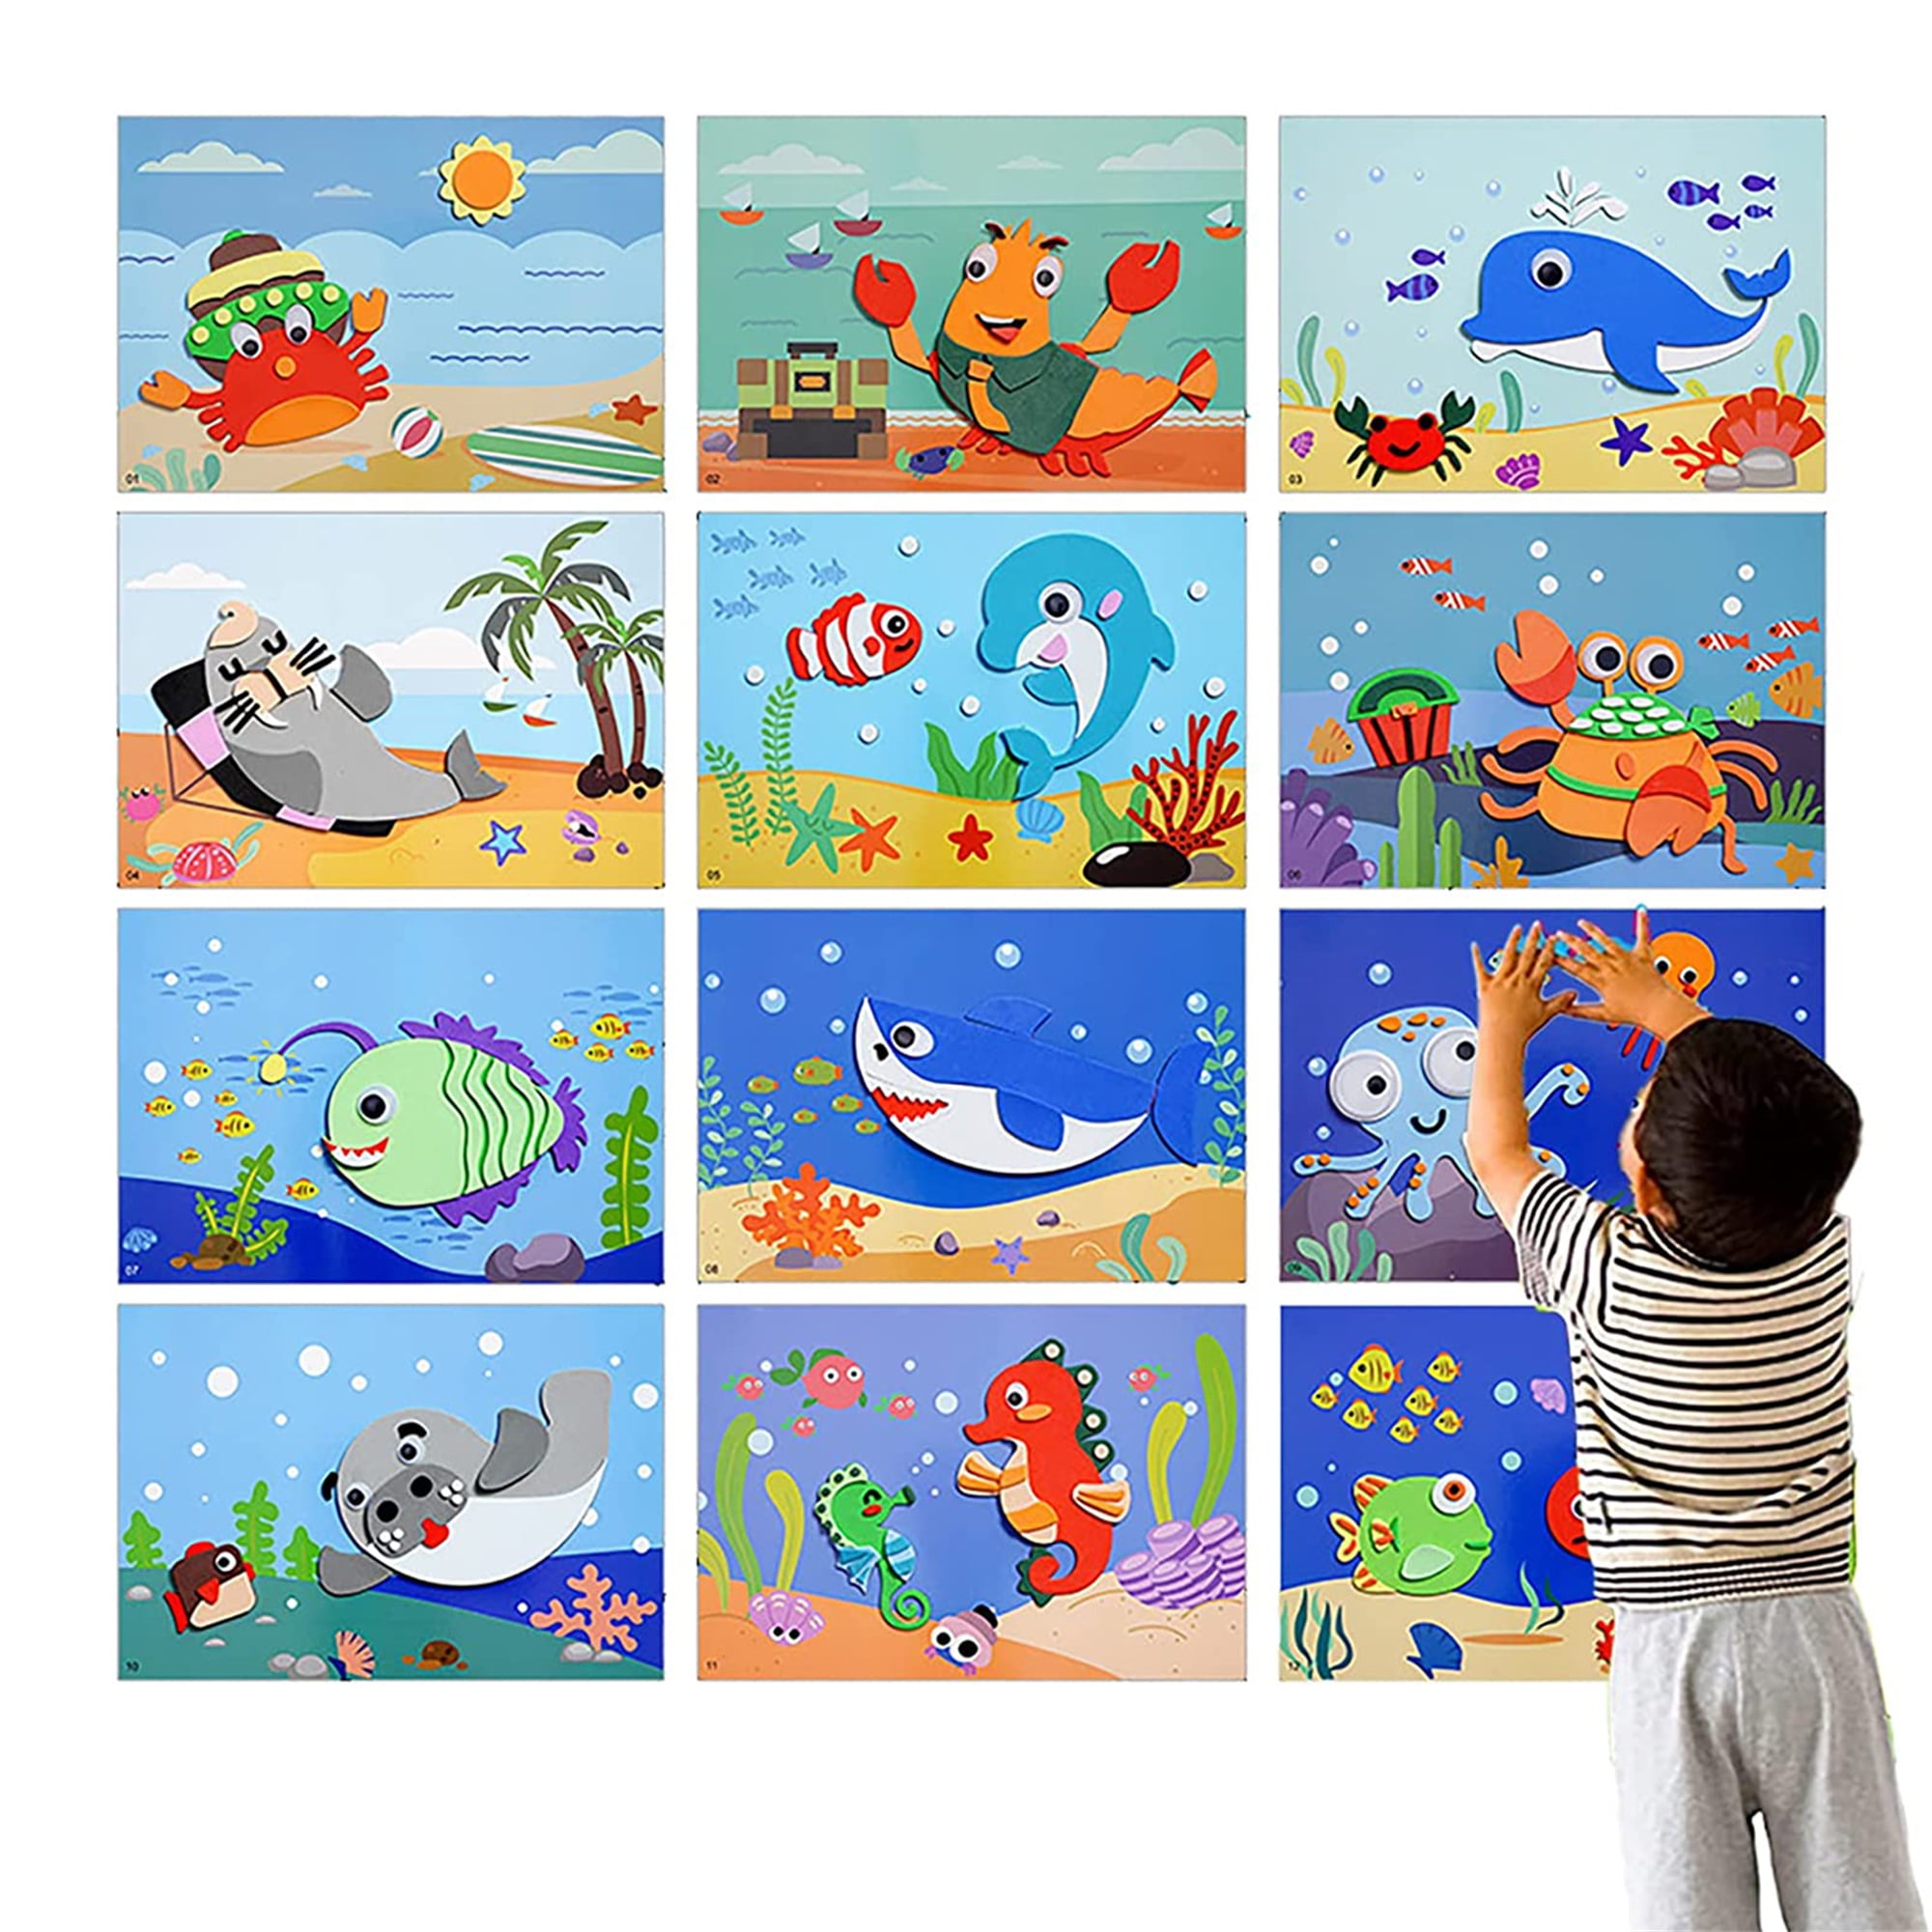 20 Pcs 3D EVA Stickers Preschool Toddler Crafts Ages 2-4 Child Pack